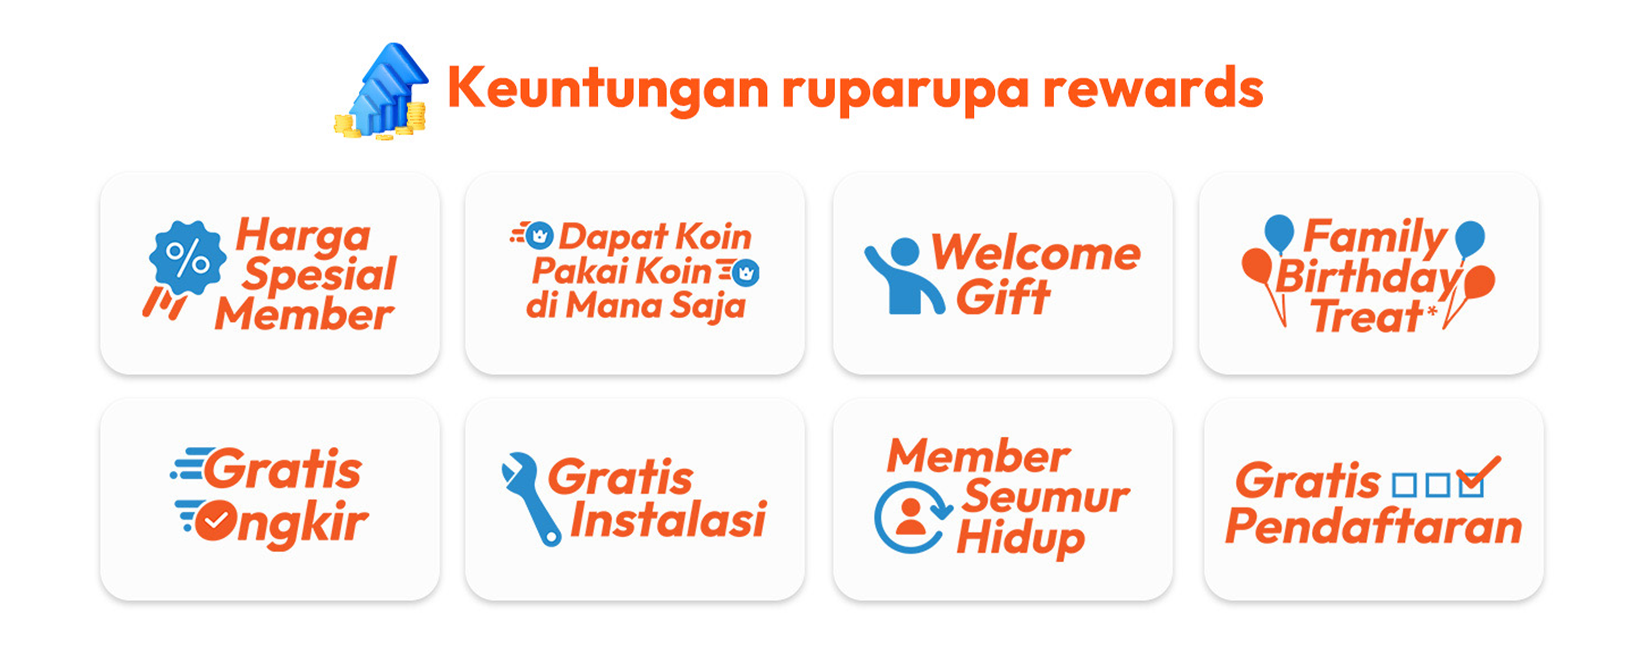 keuntungan ruparupa rewards